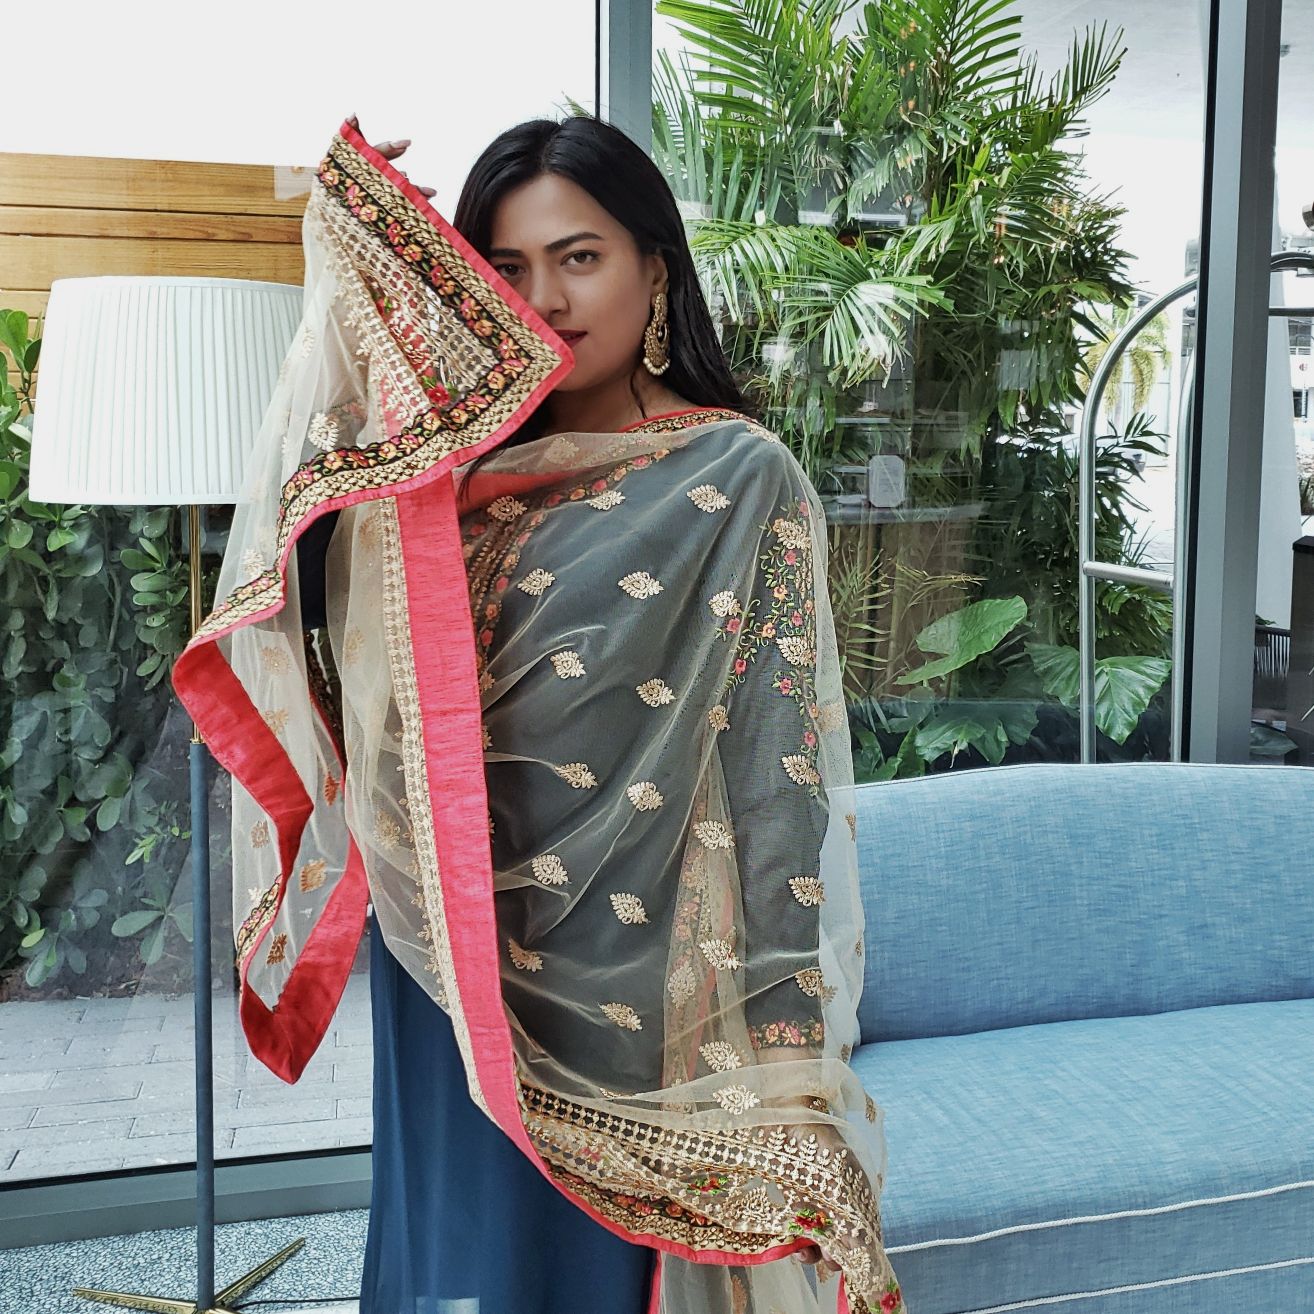 Miami Fashionista Indian Bangladesh Style Blogger Afroza Khan